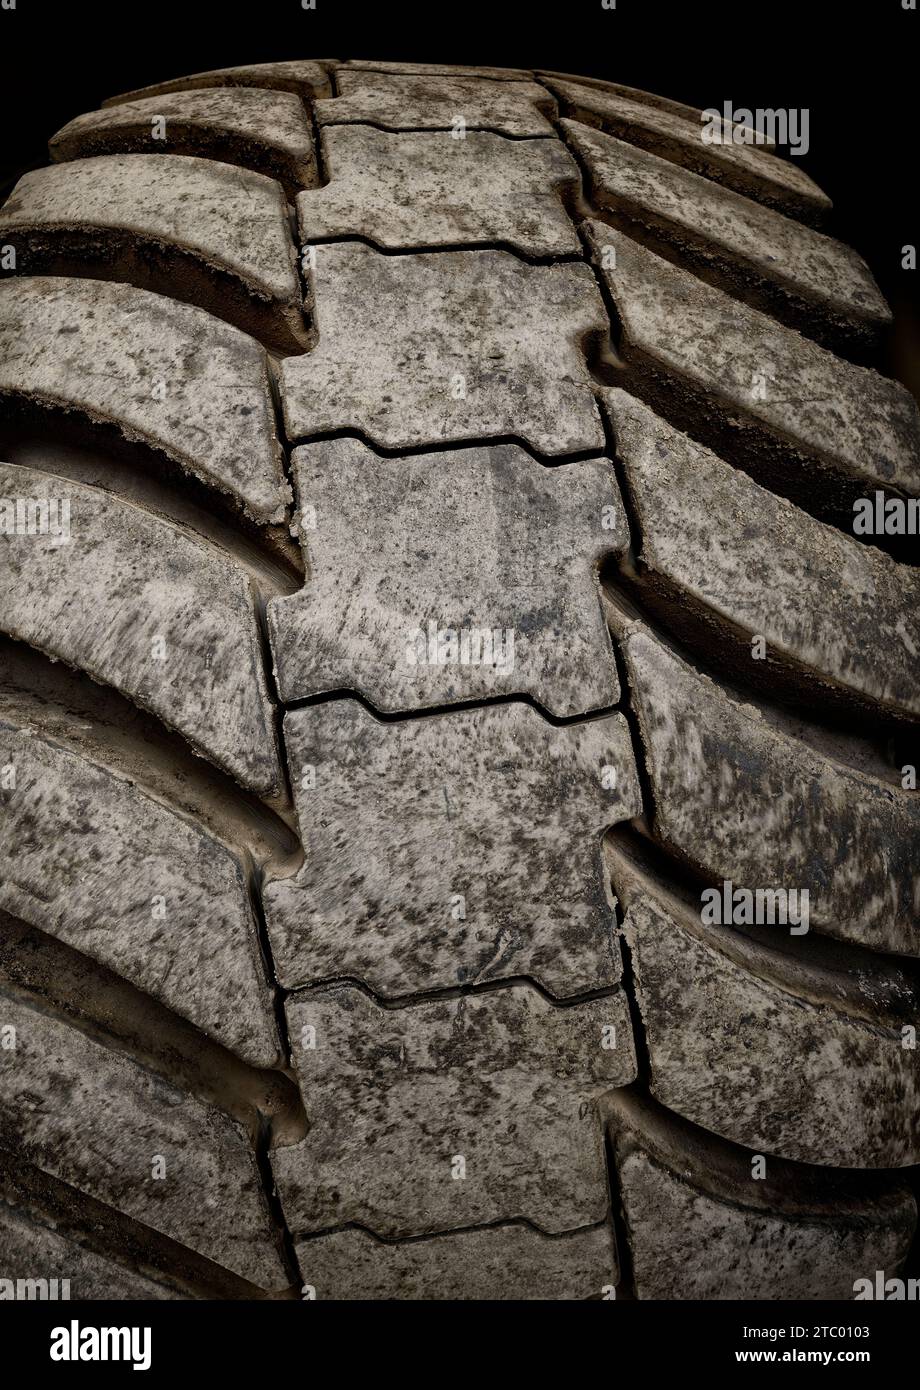 A heavy duty dump truck tire tread detail Stock Photo